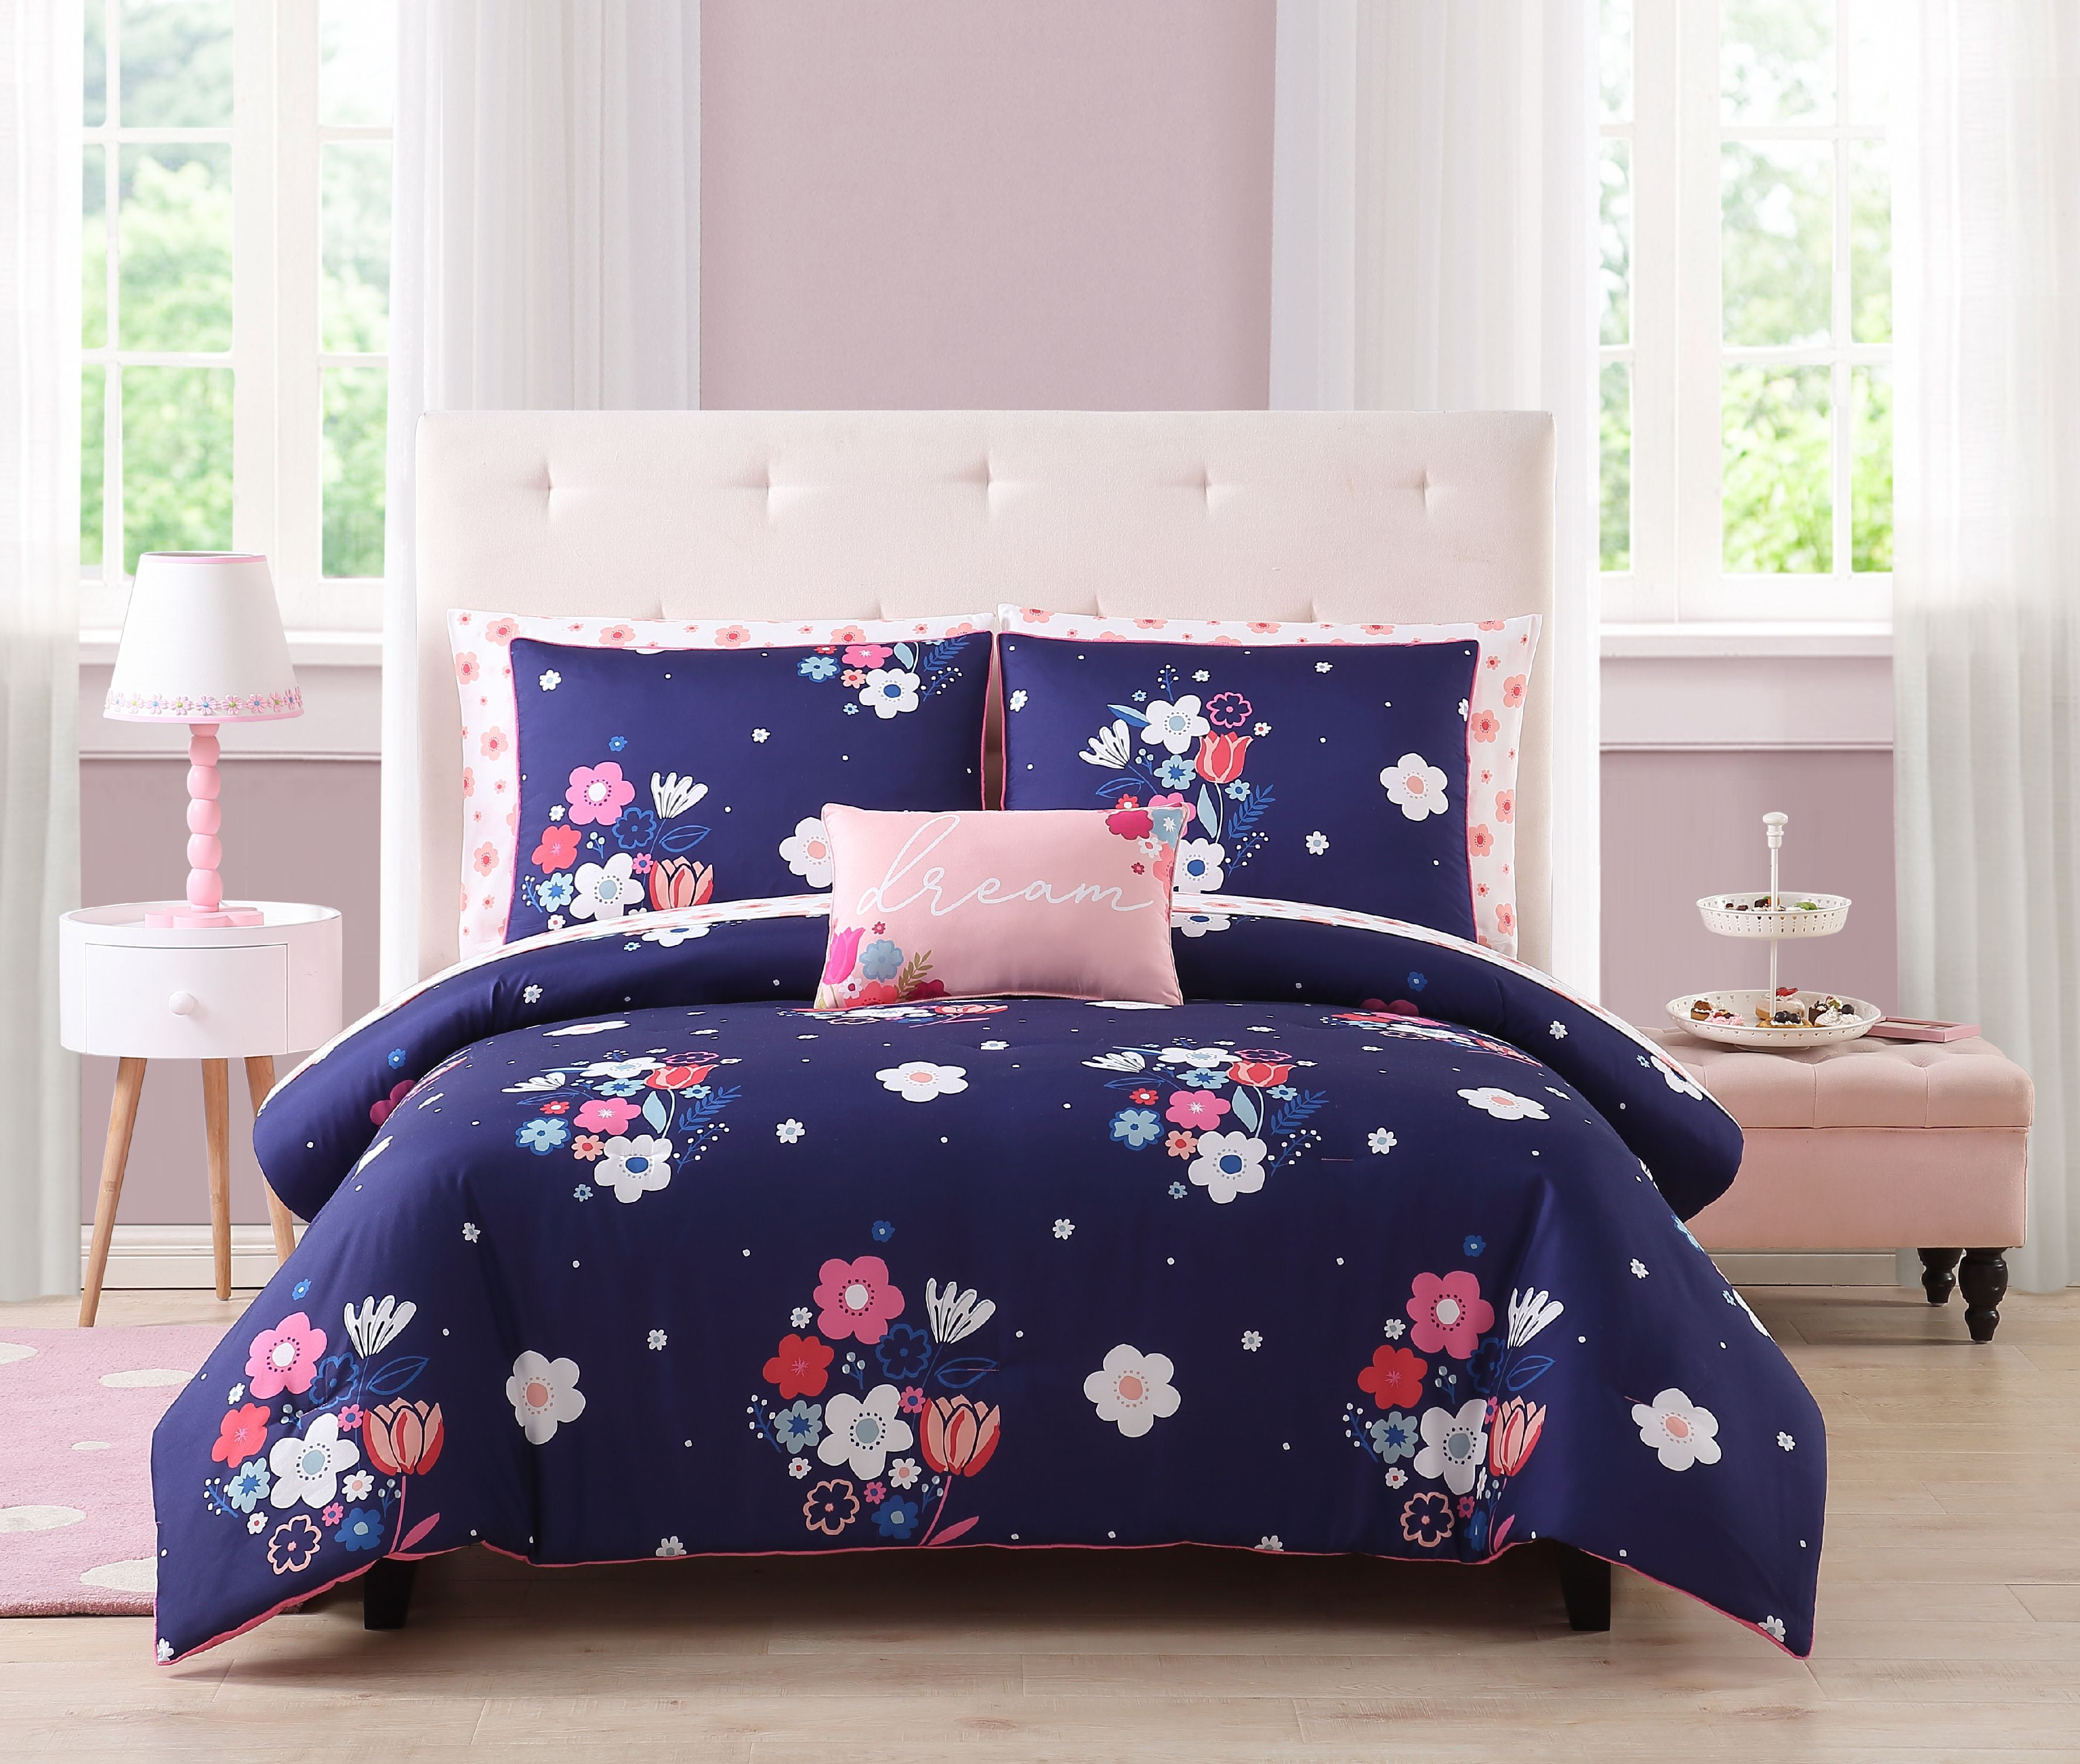 Girls Bedding Full Size Set Comforter Sheet Sham 8 Piece Comfort Purple Bed New 